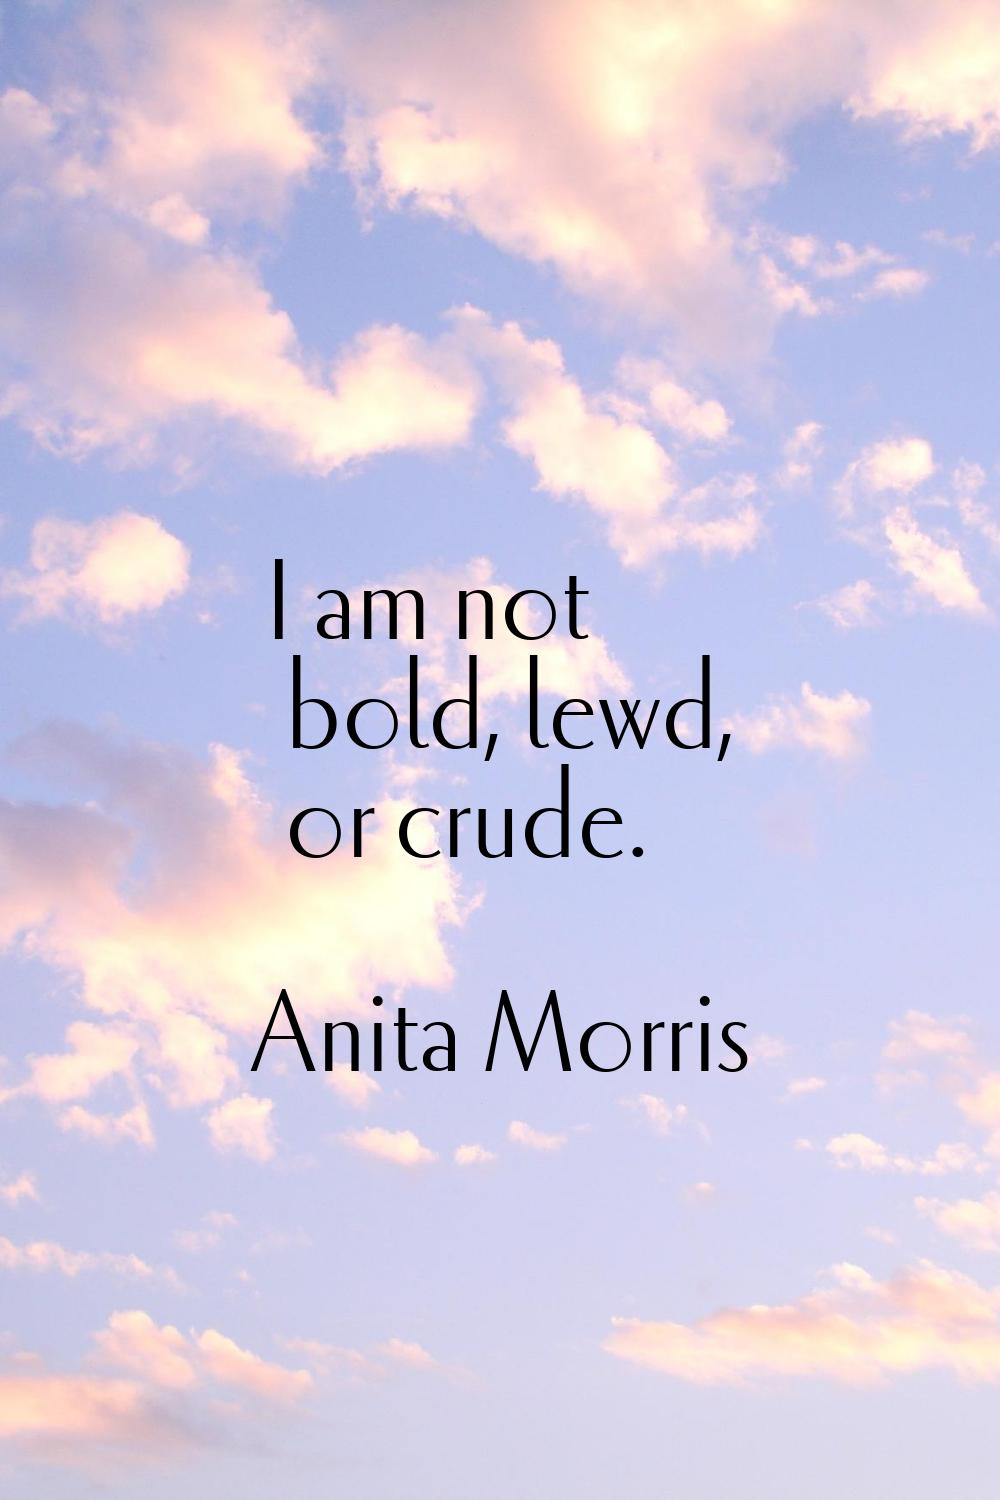 I am not bold, lewd, or crude.